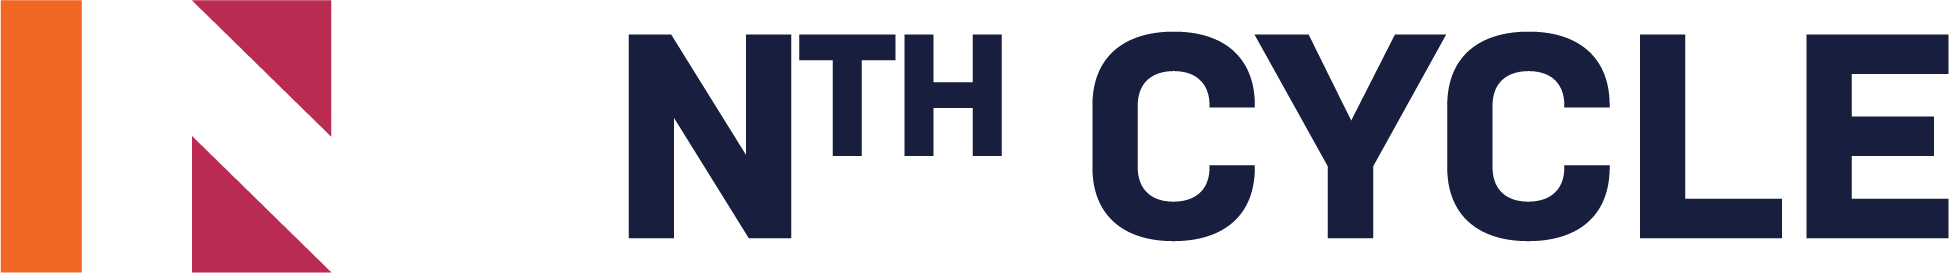 nth-cycle-logo-full-color-horizontal